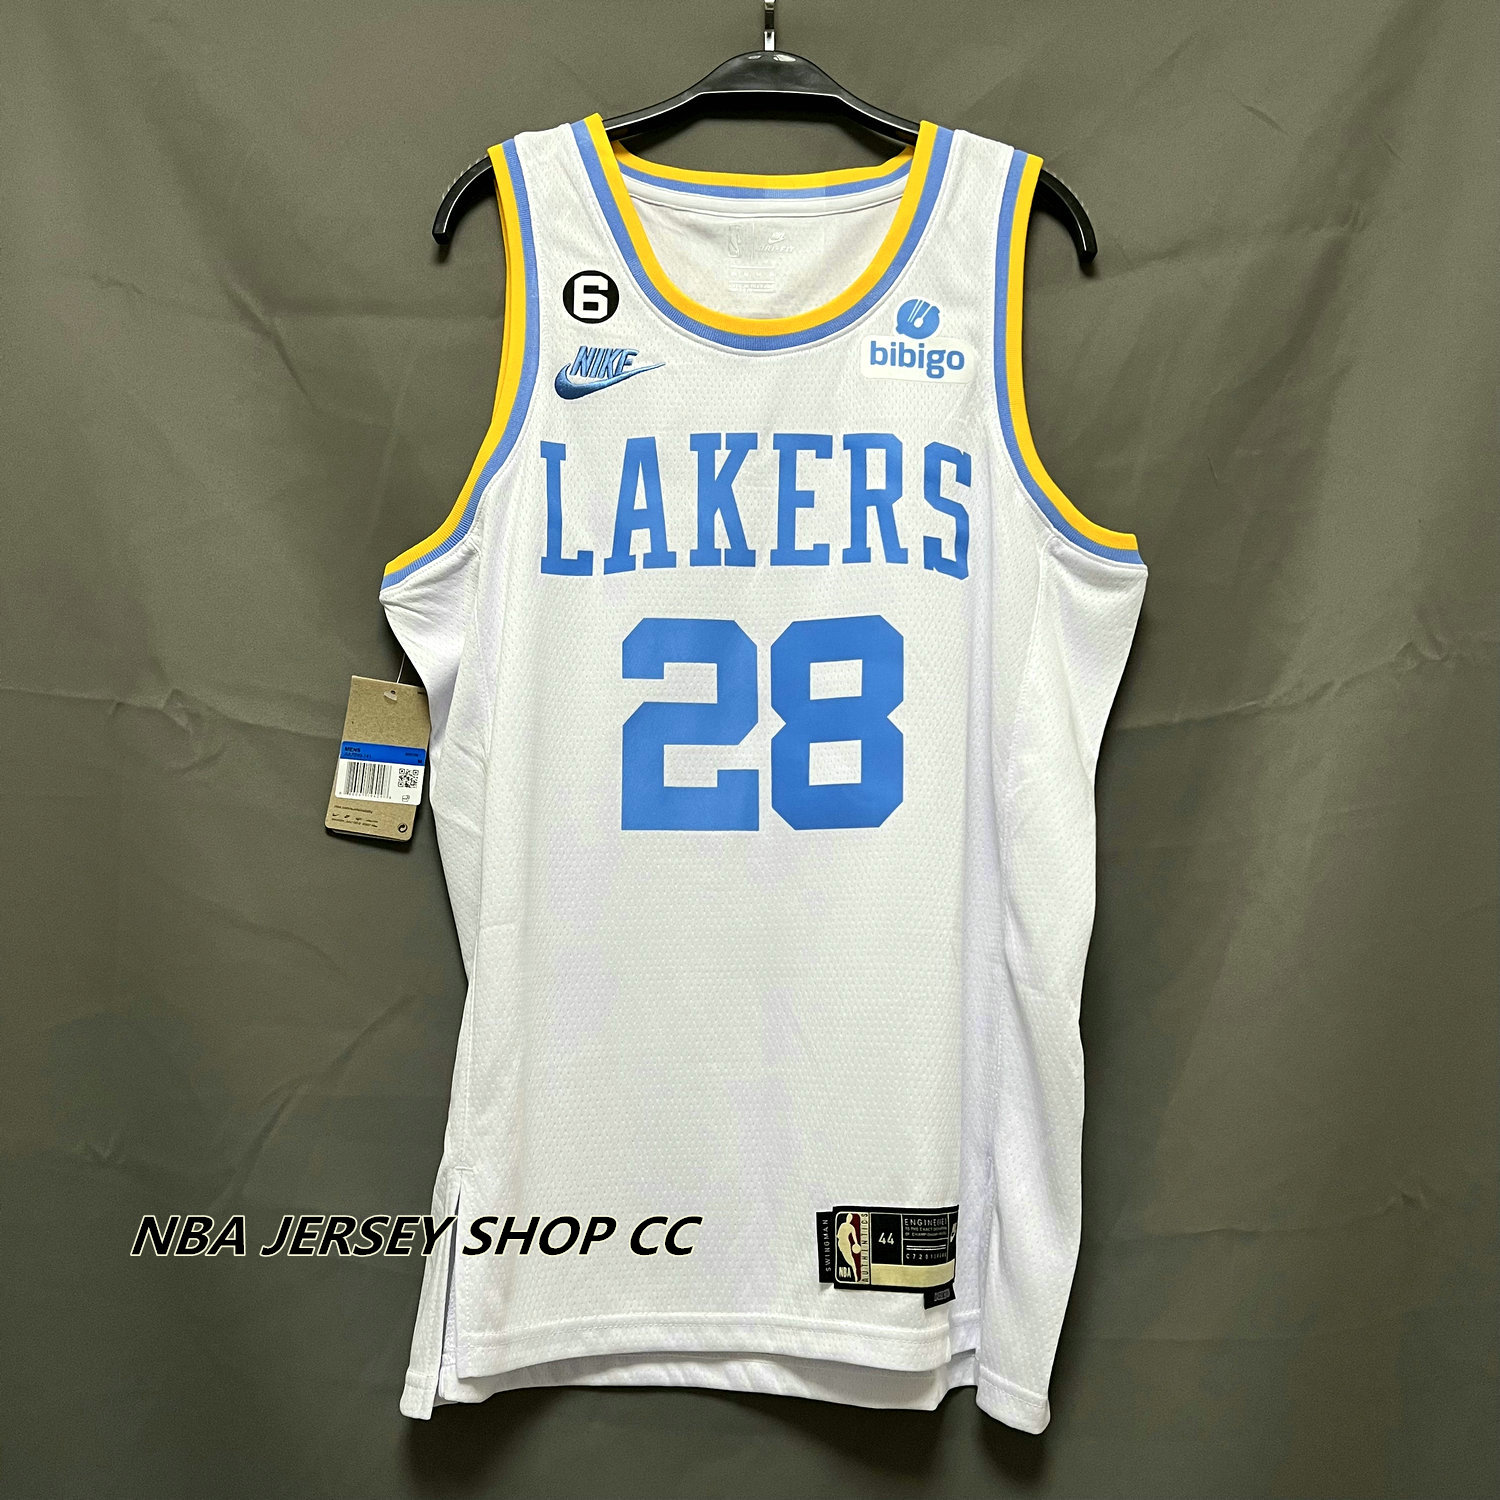 2023 LA Lakers Hachimura #28 Jordan Swingman Alternate Jersey (XL)